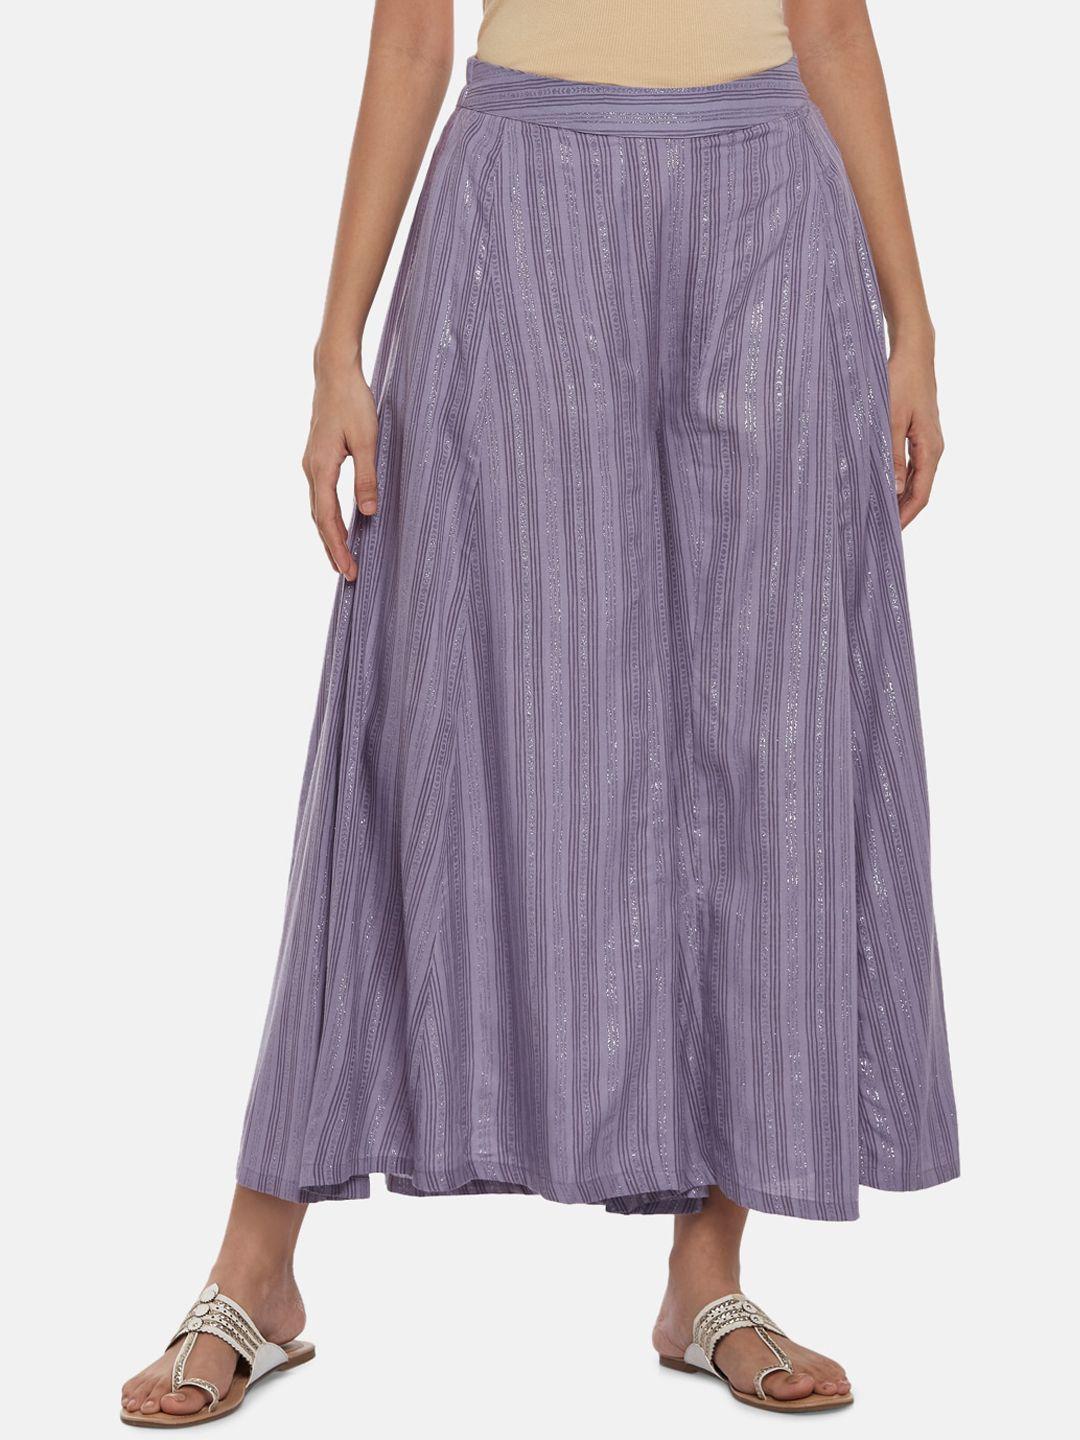 akkriti by pantaloons women lavender pleated culottes trousers